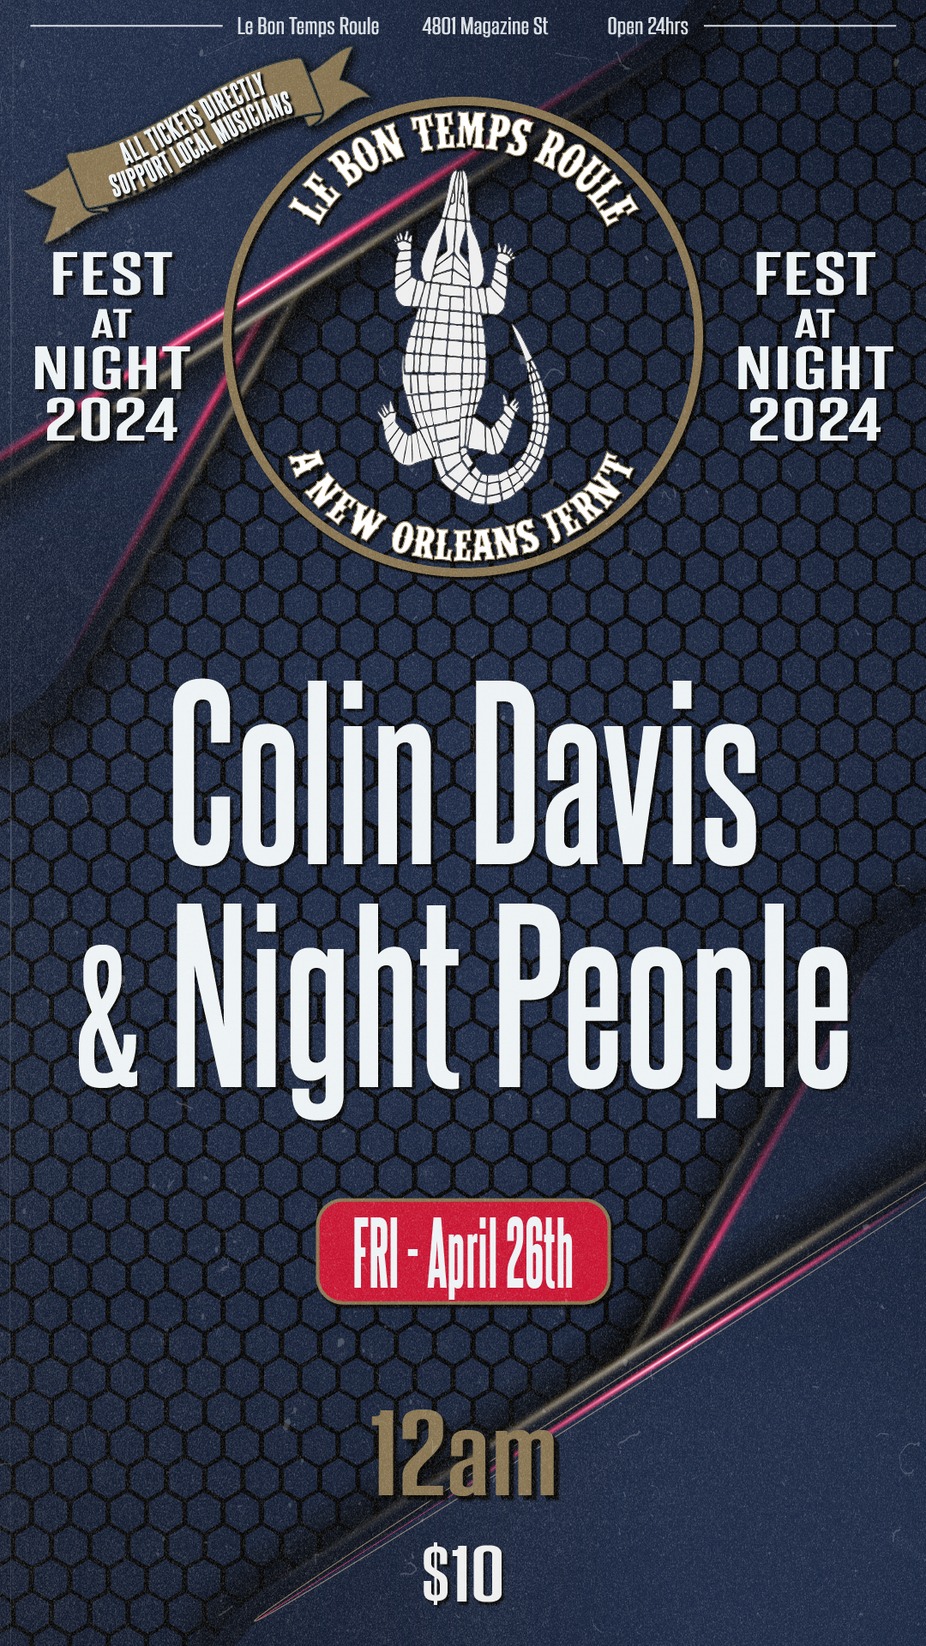 Colin Davis & Night People event photo